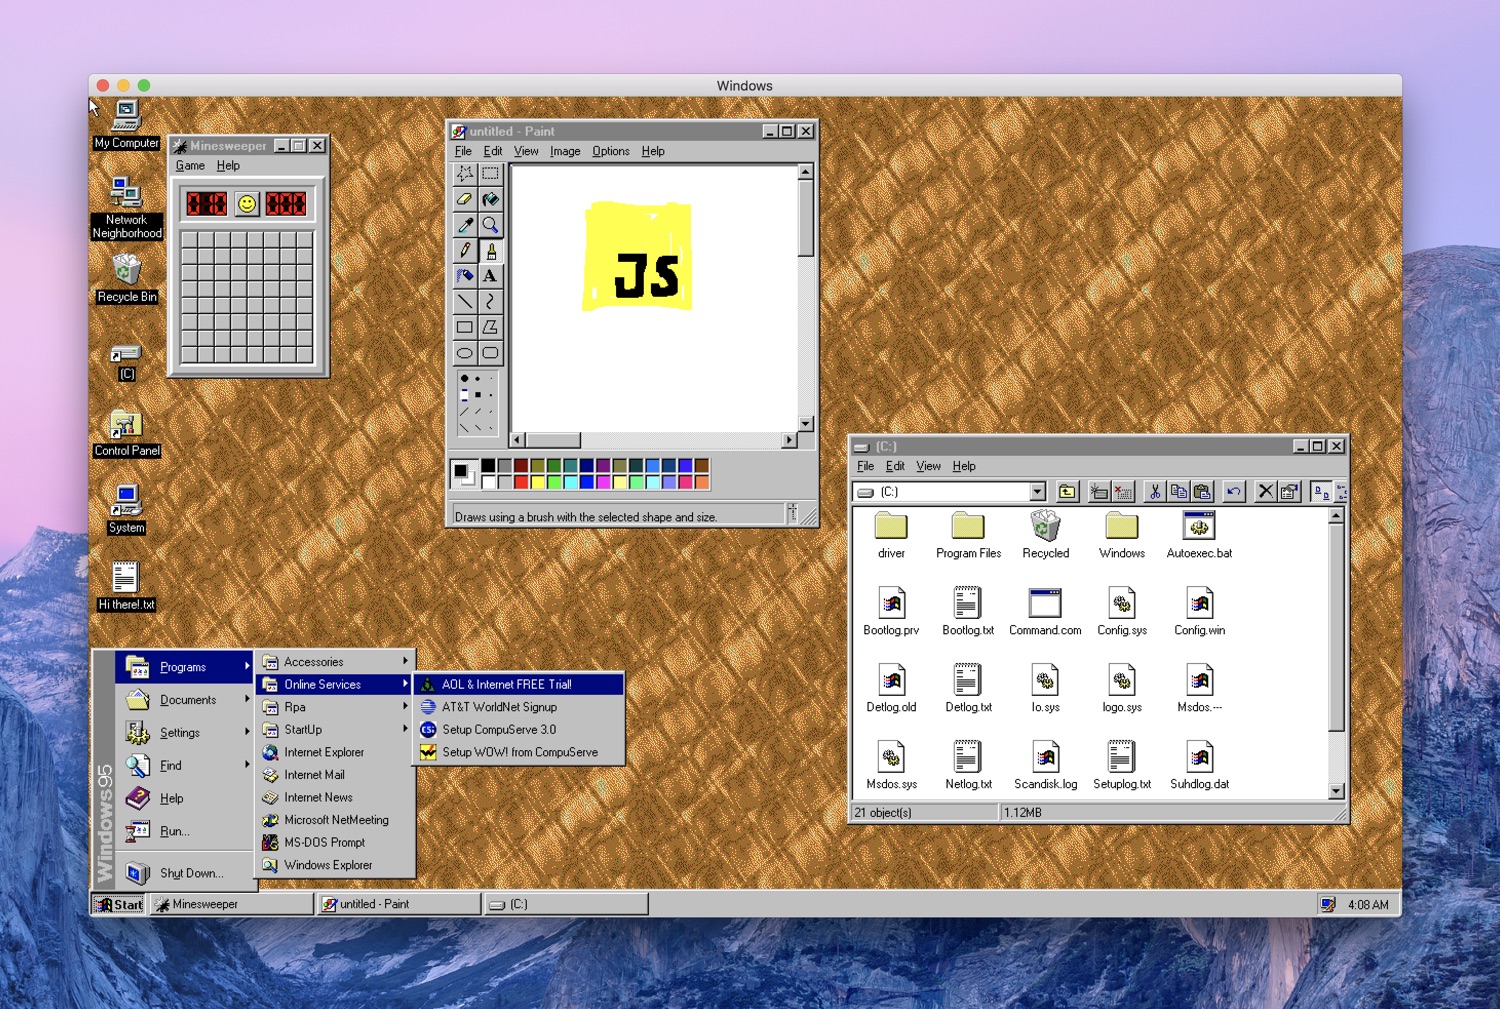 mount an image on mac os 9 emulator